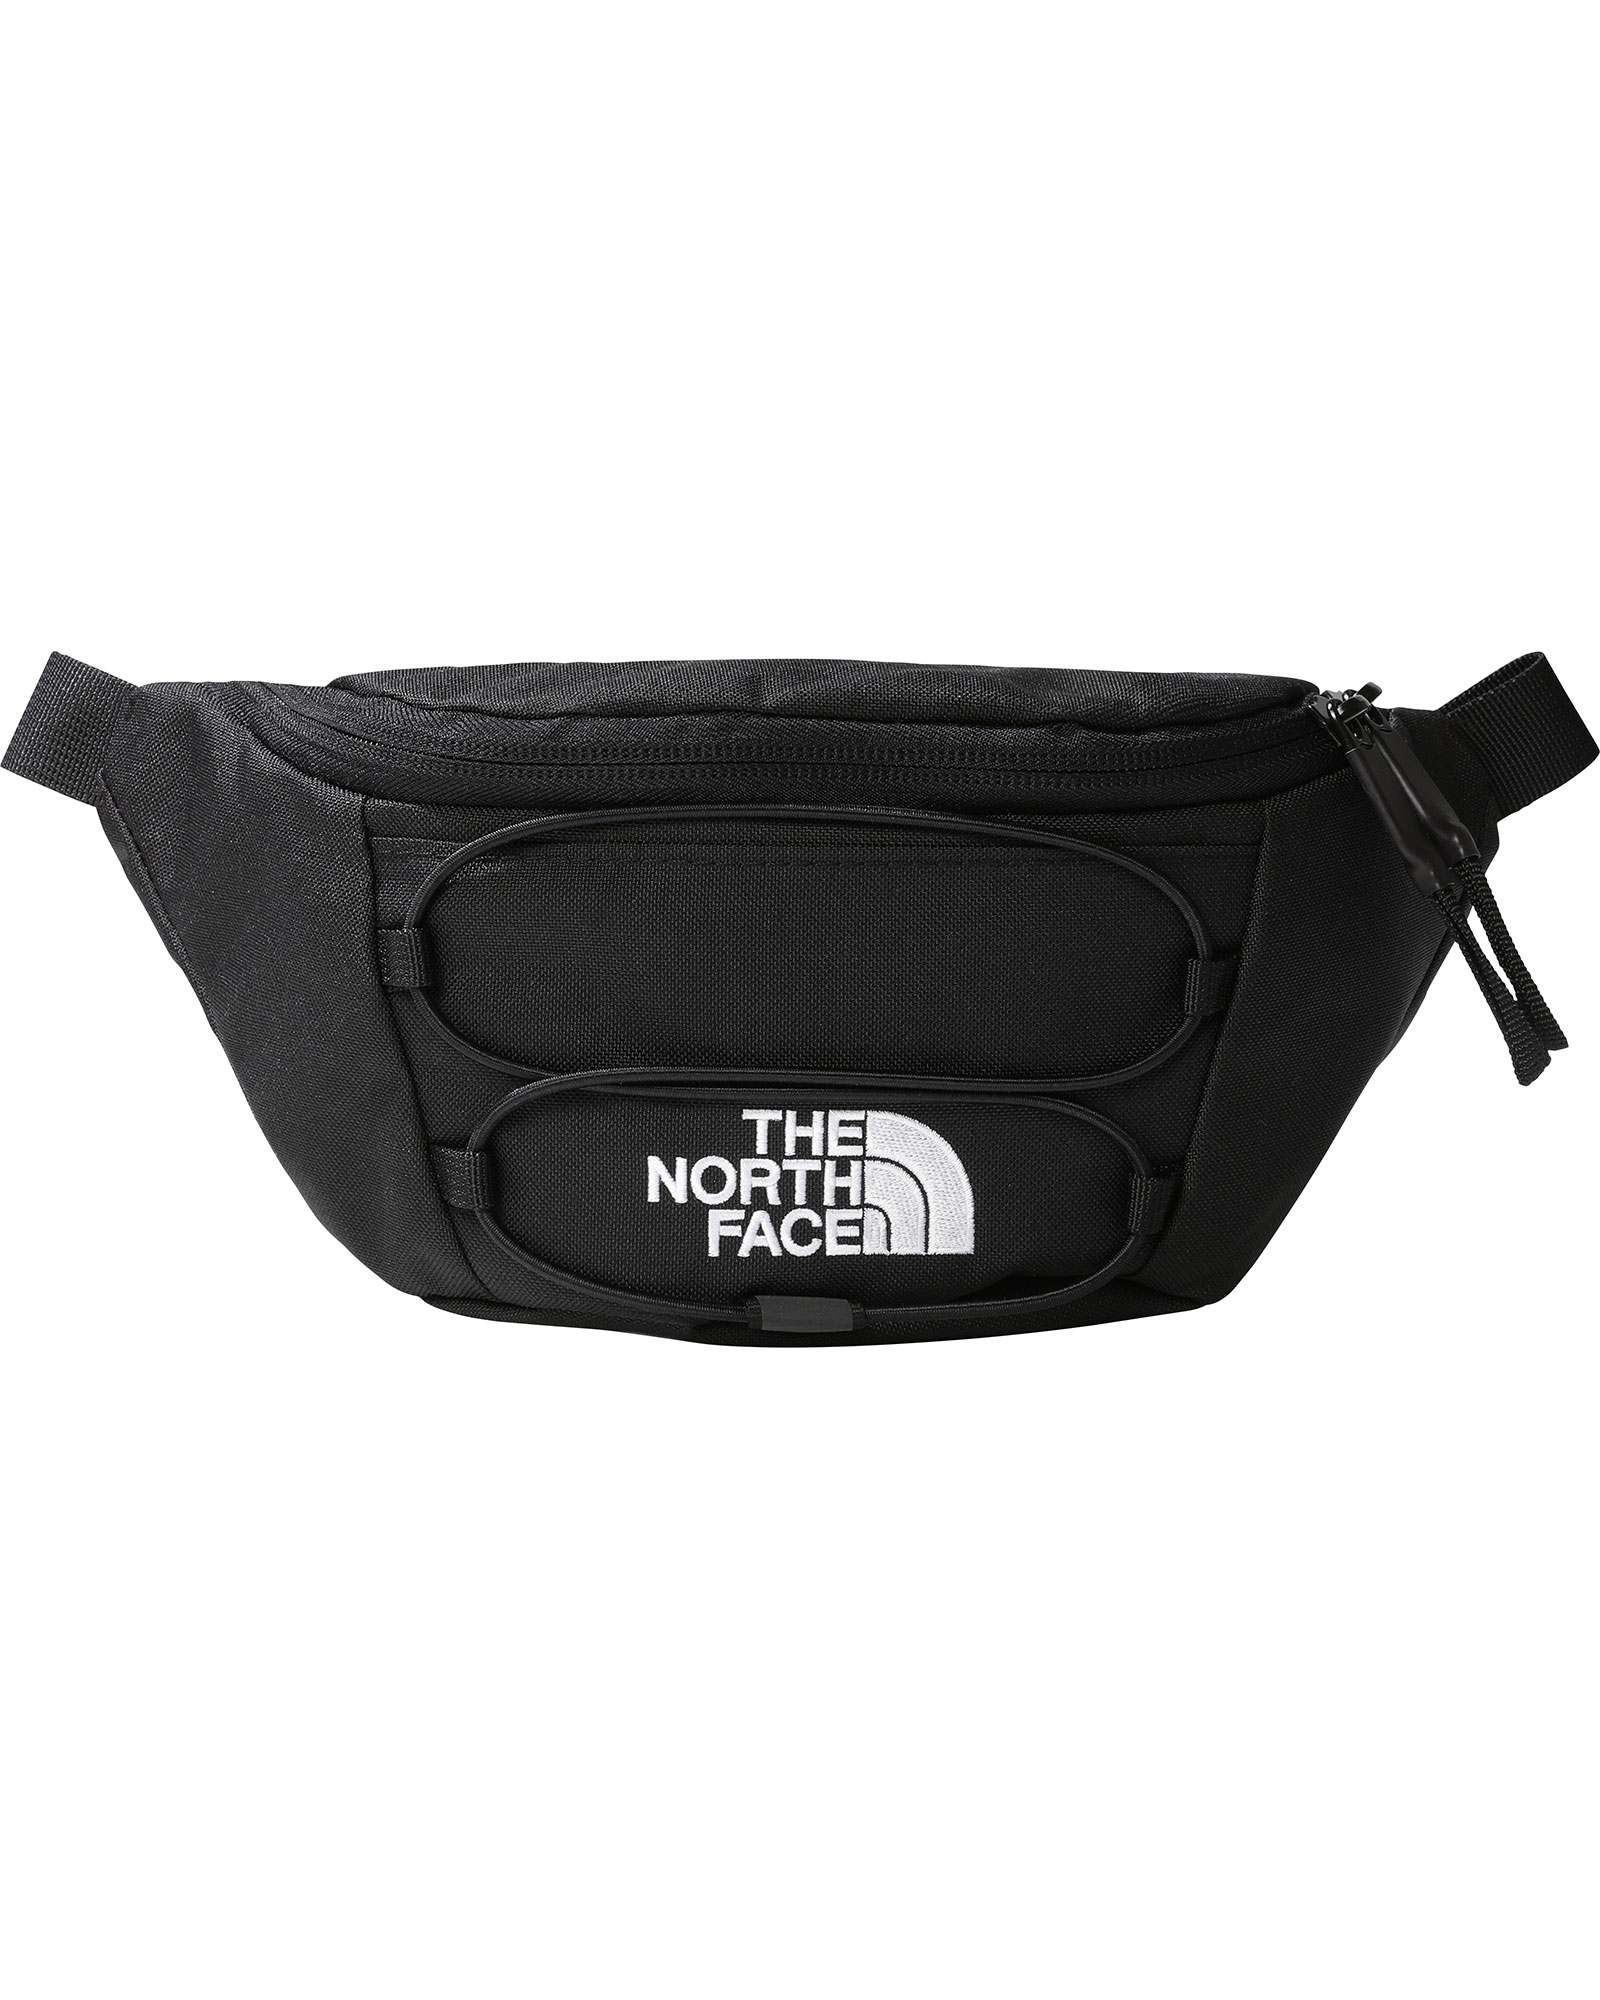 The North Face Jester Lumbar Bag - TNF Black